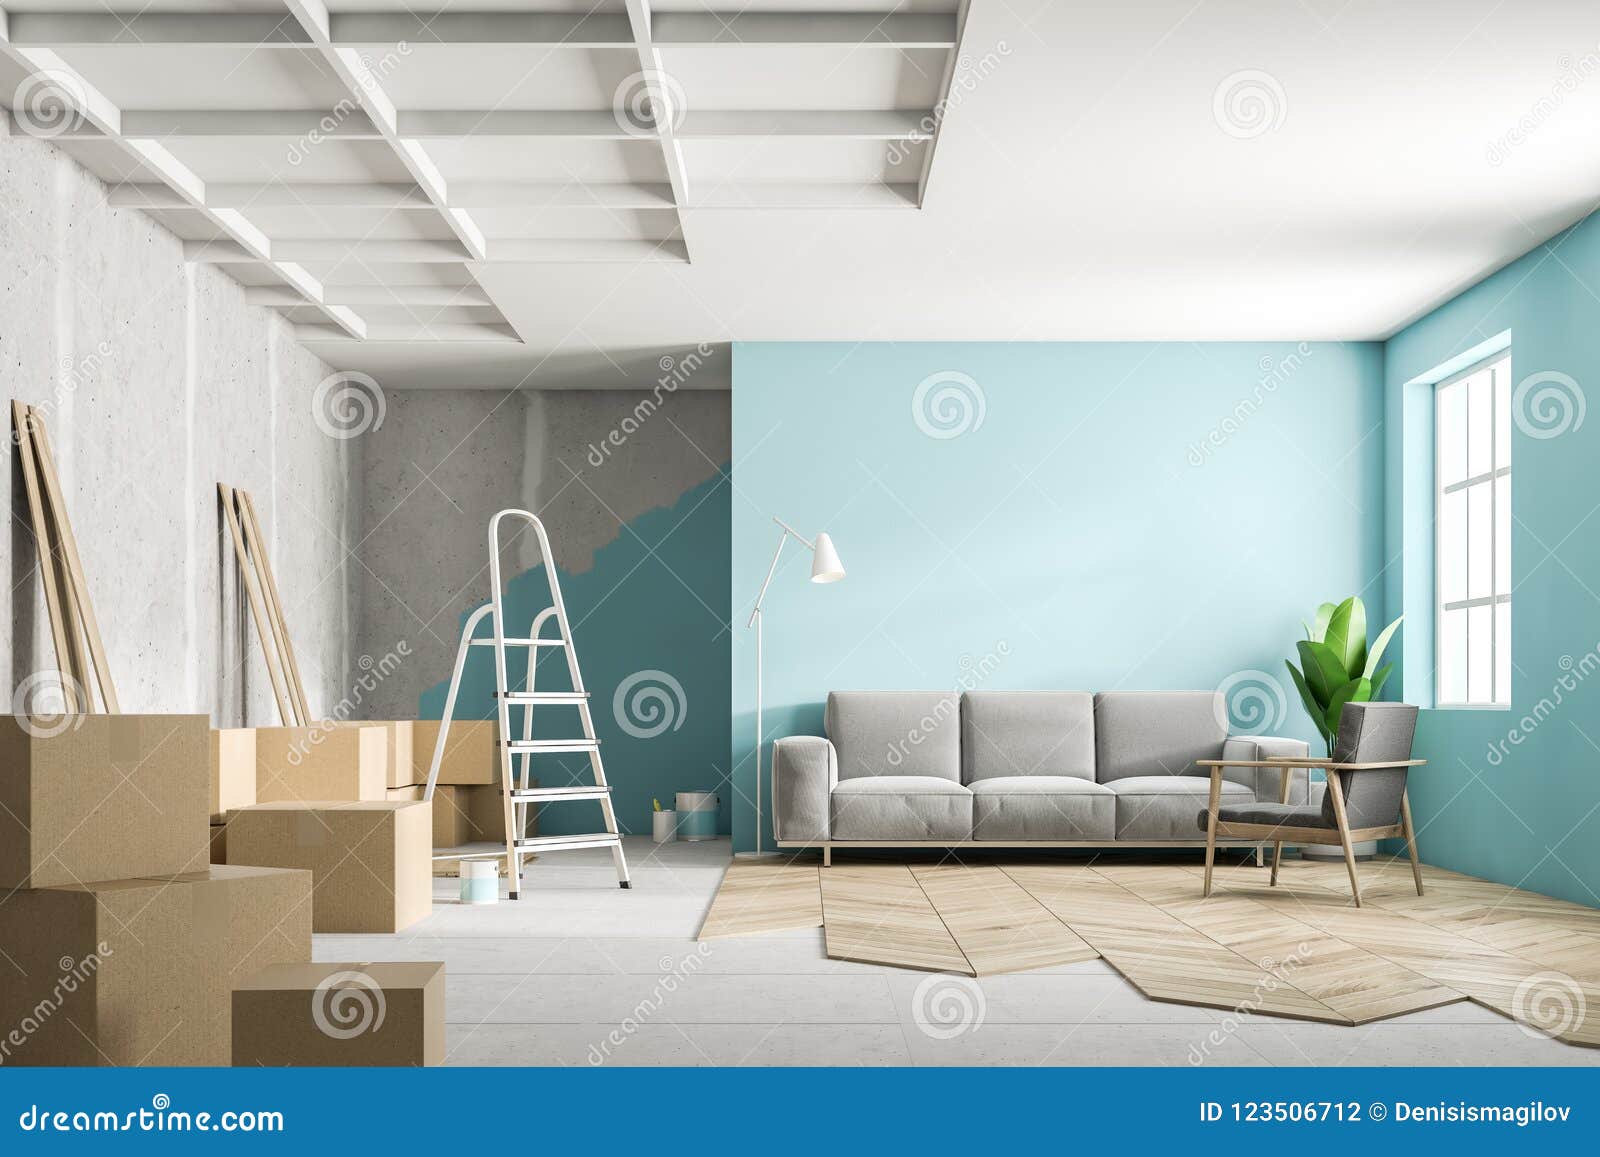 blue living room interior during renovation